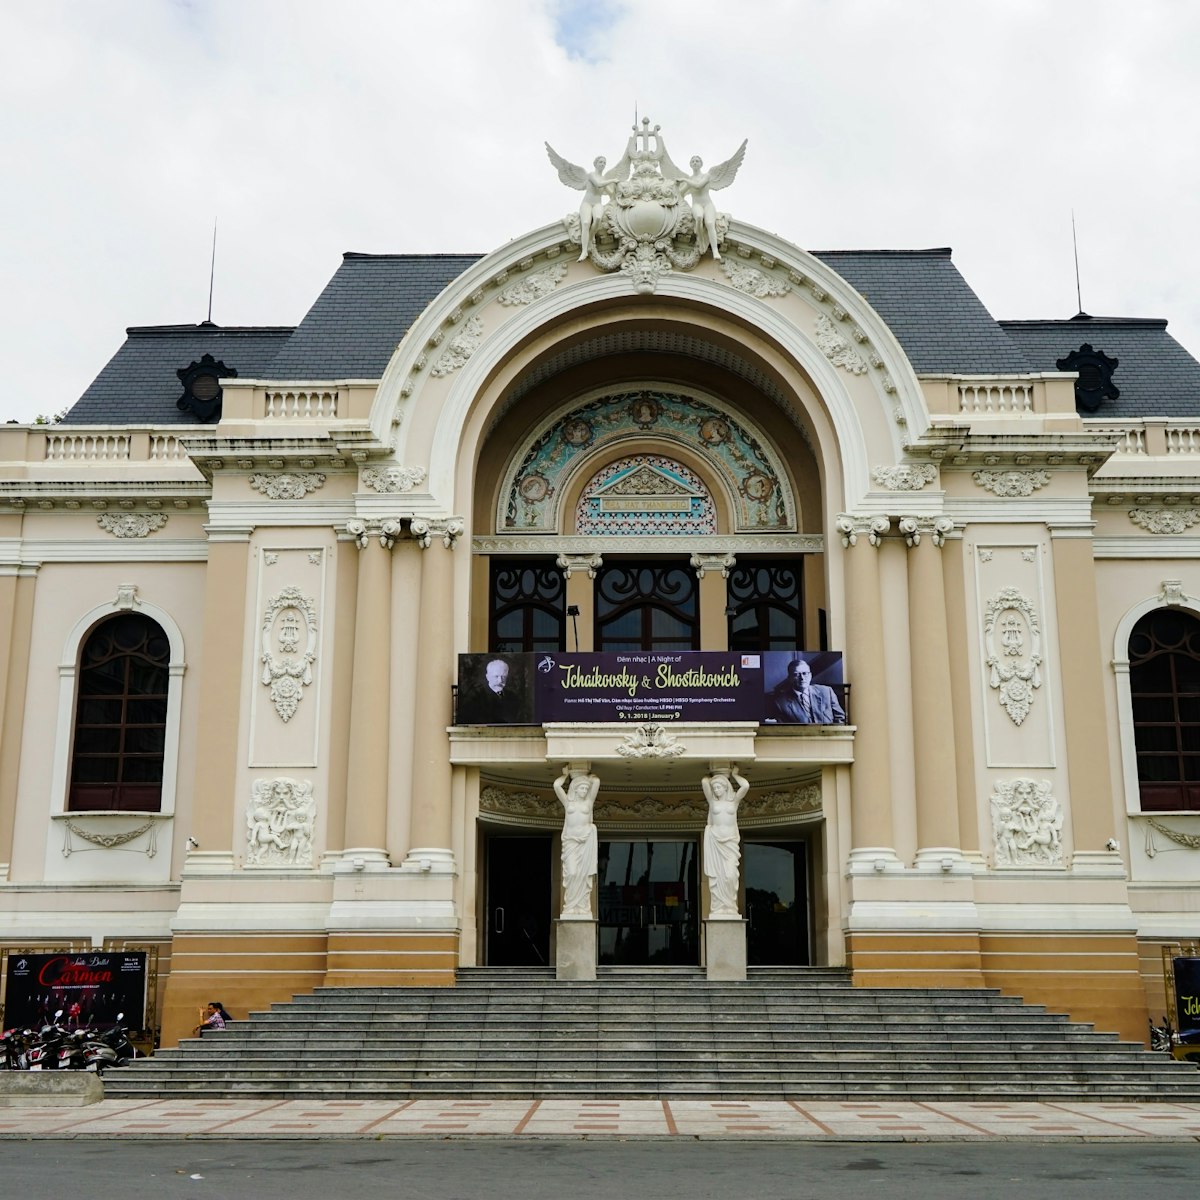 Saigon's Opera House, built in 1900